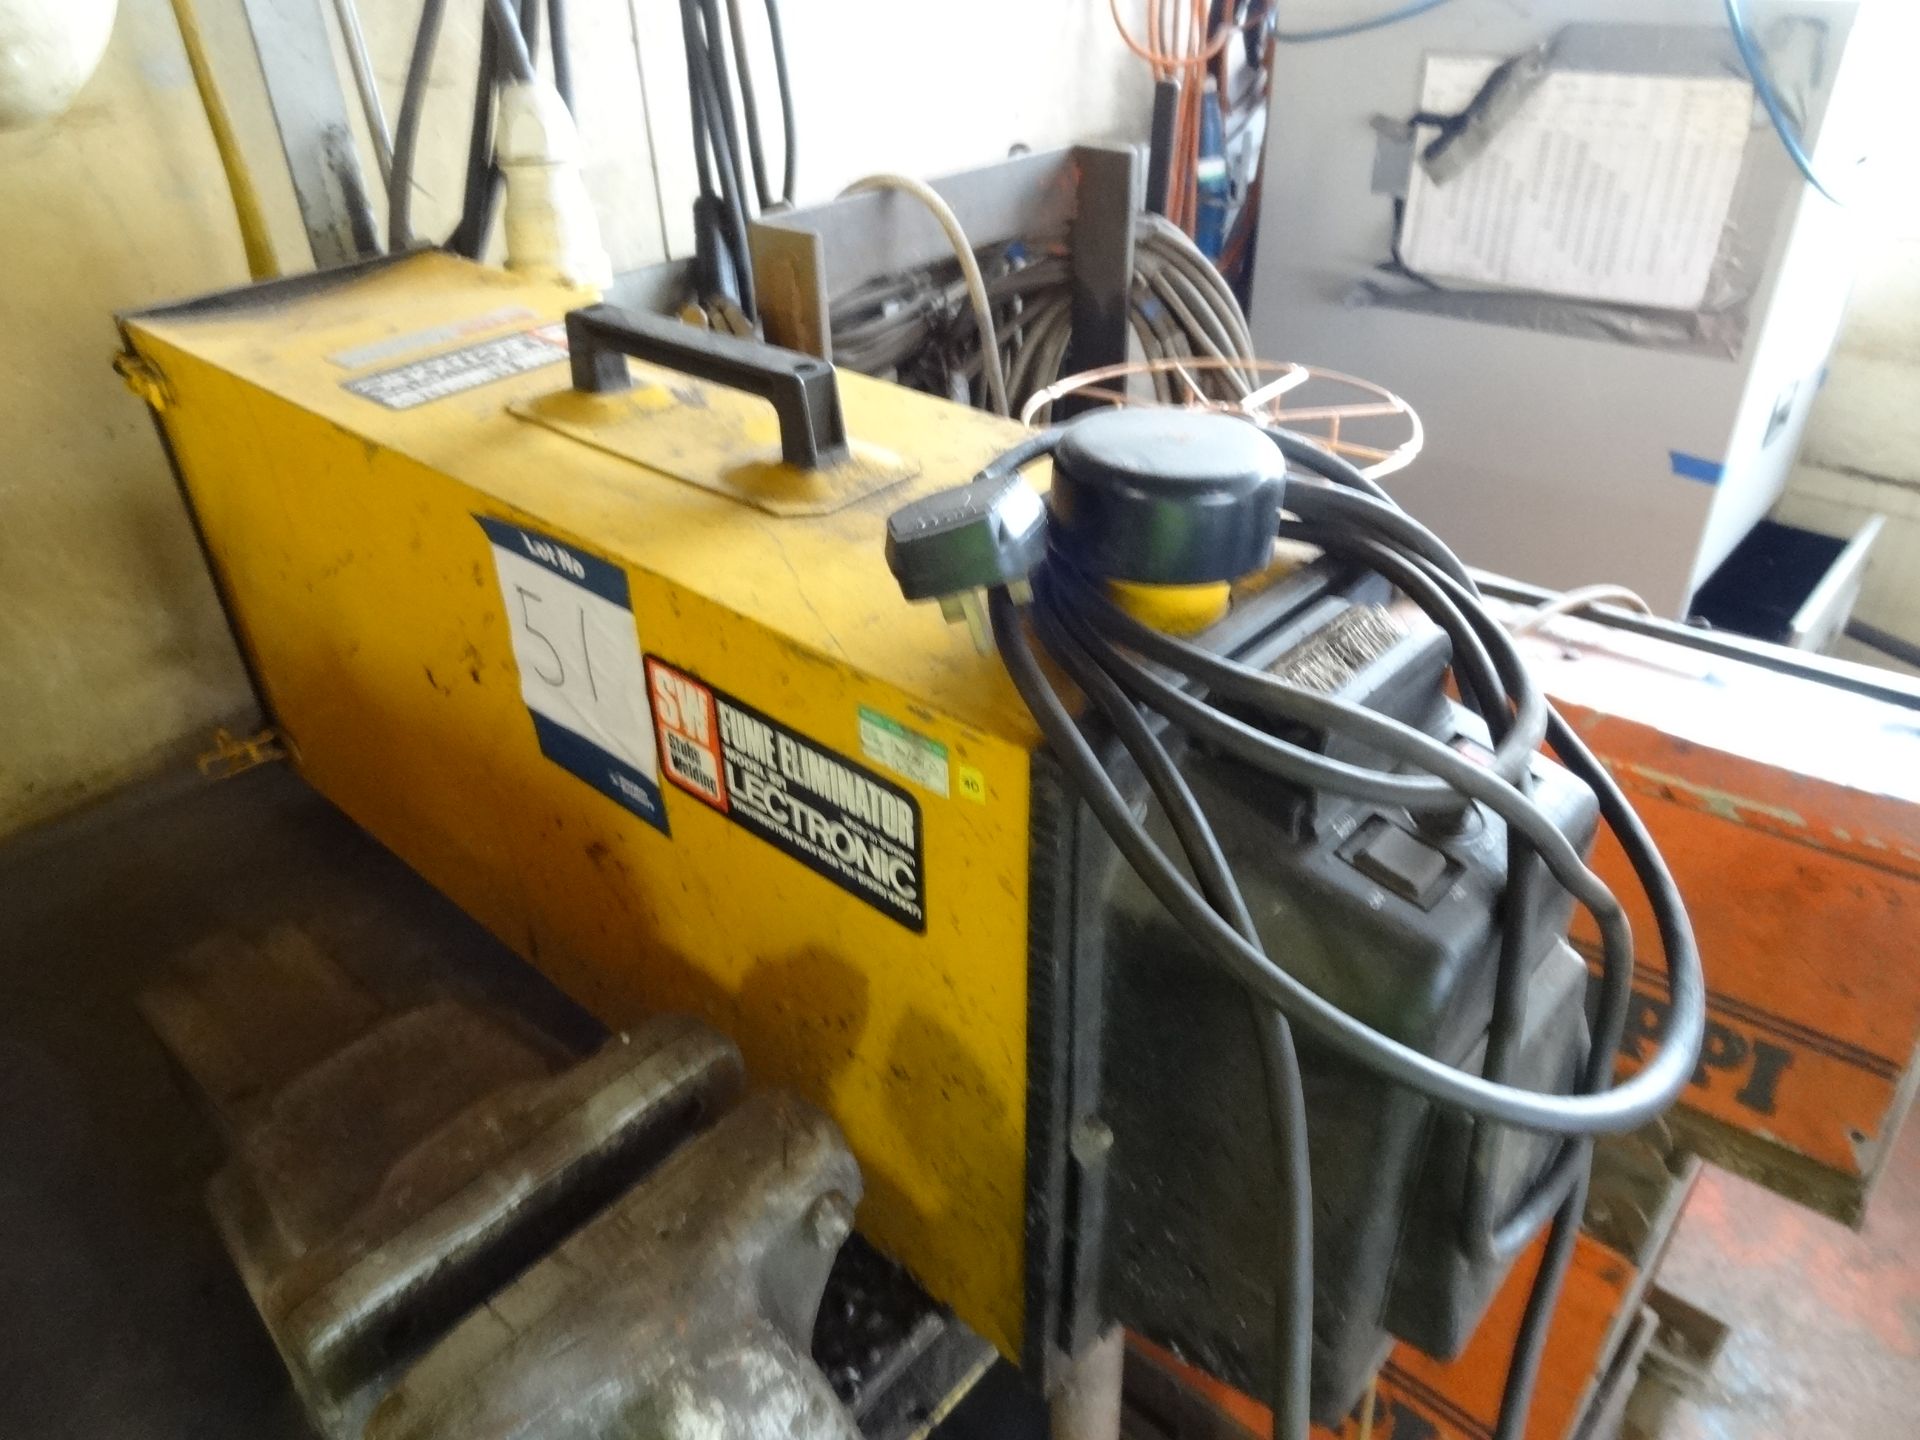 Stubs 831 welding portable electronic fume eliminator (Lift out charge £5 plus VAT)